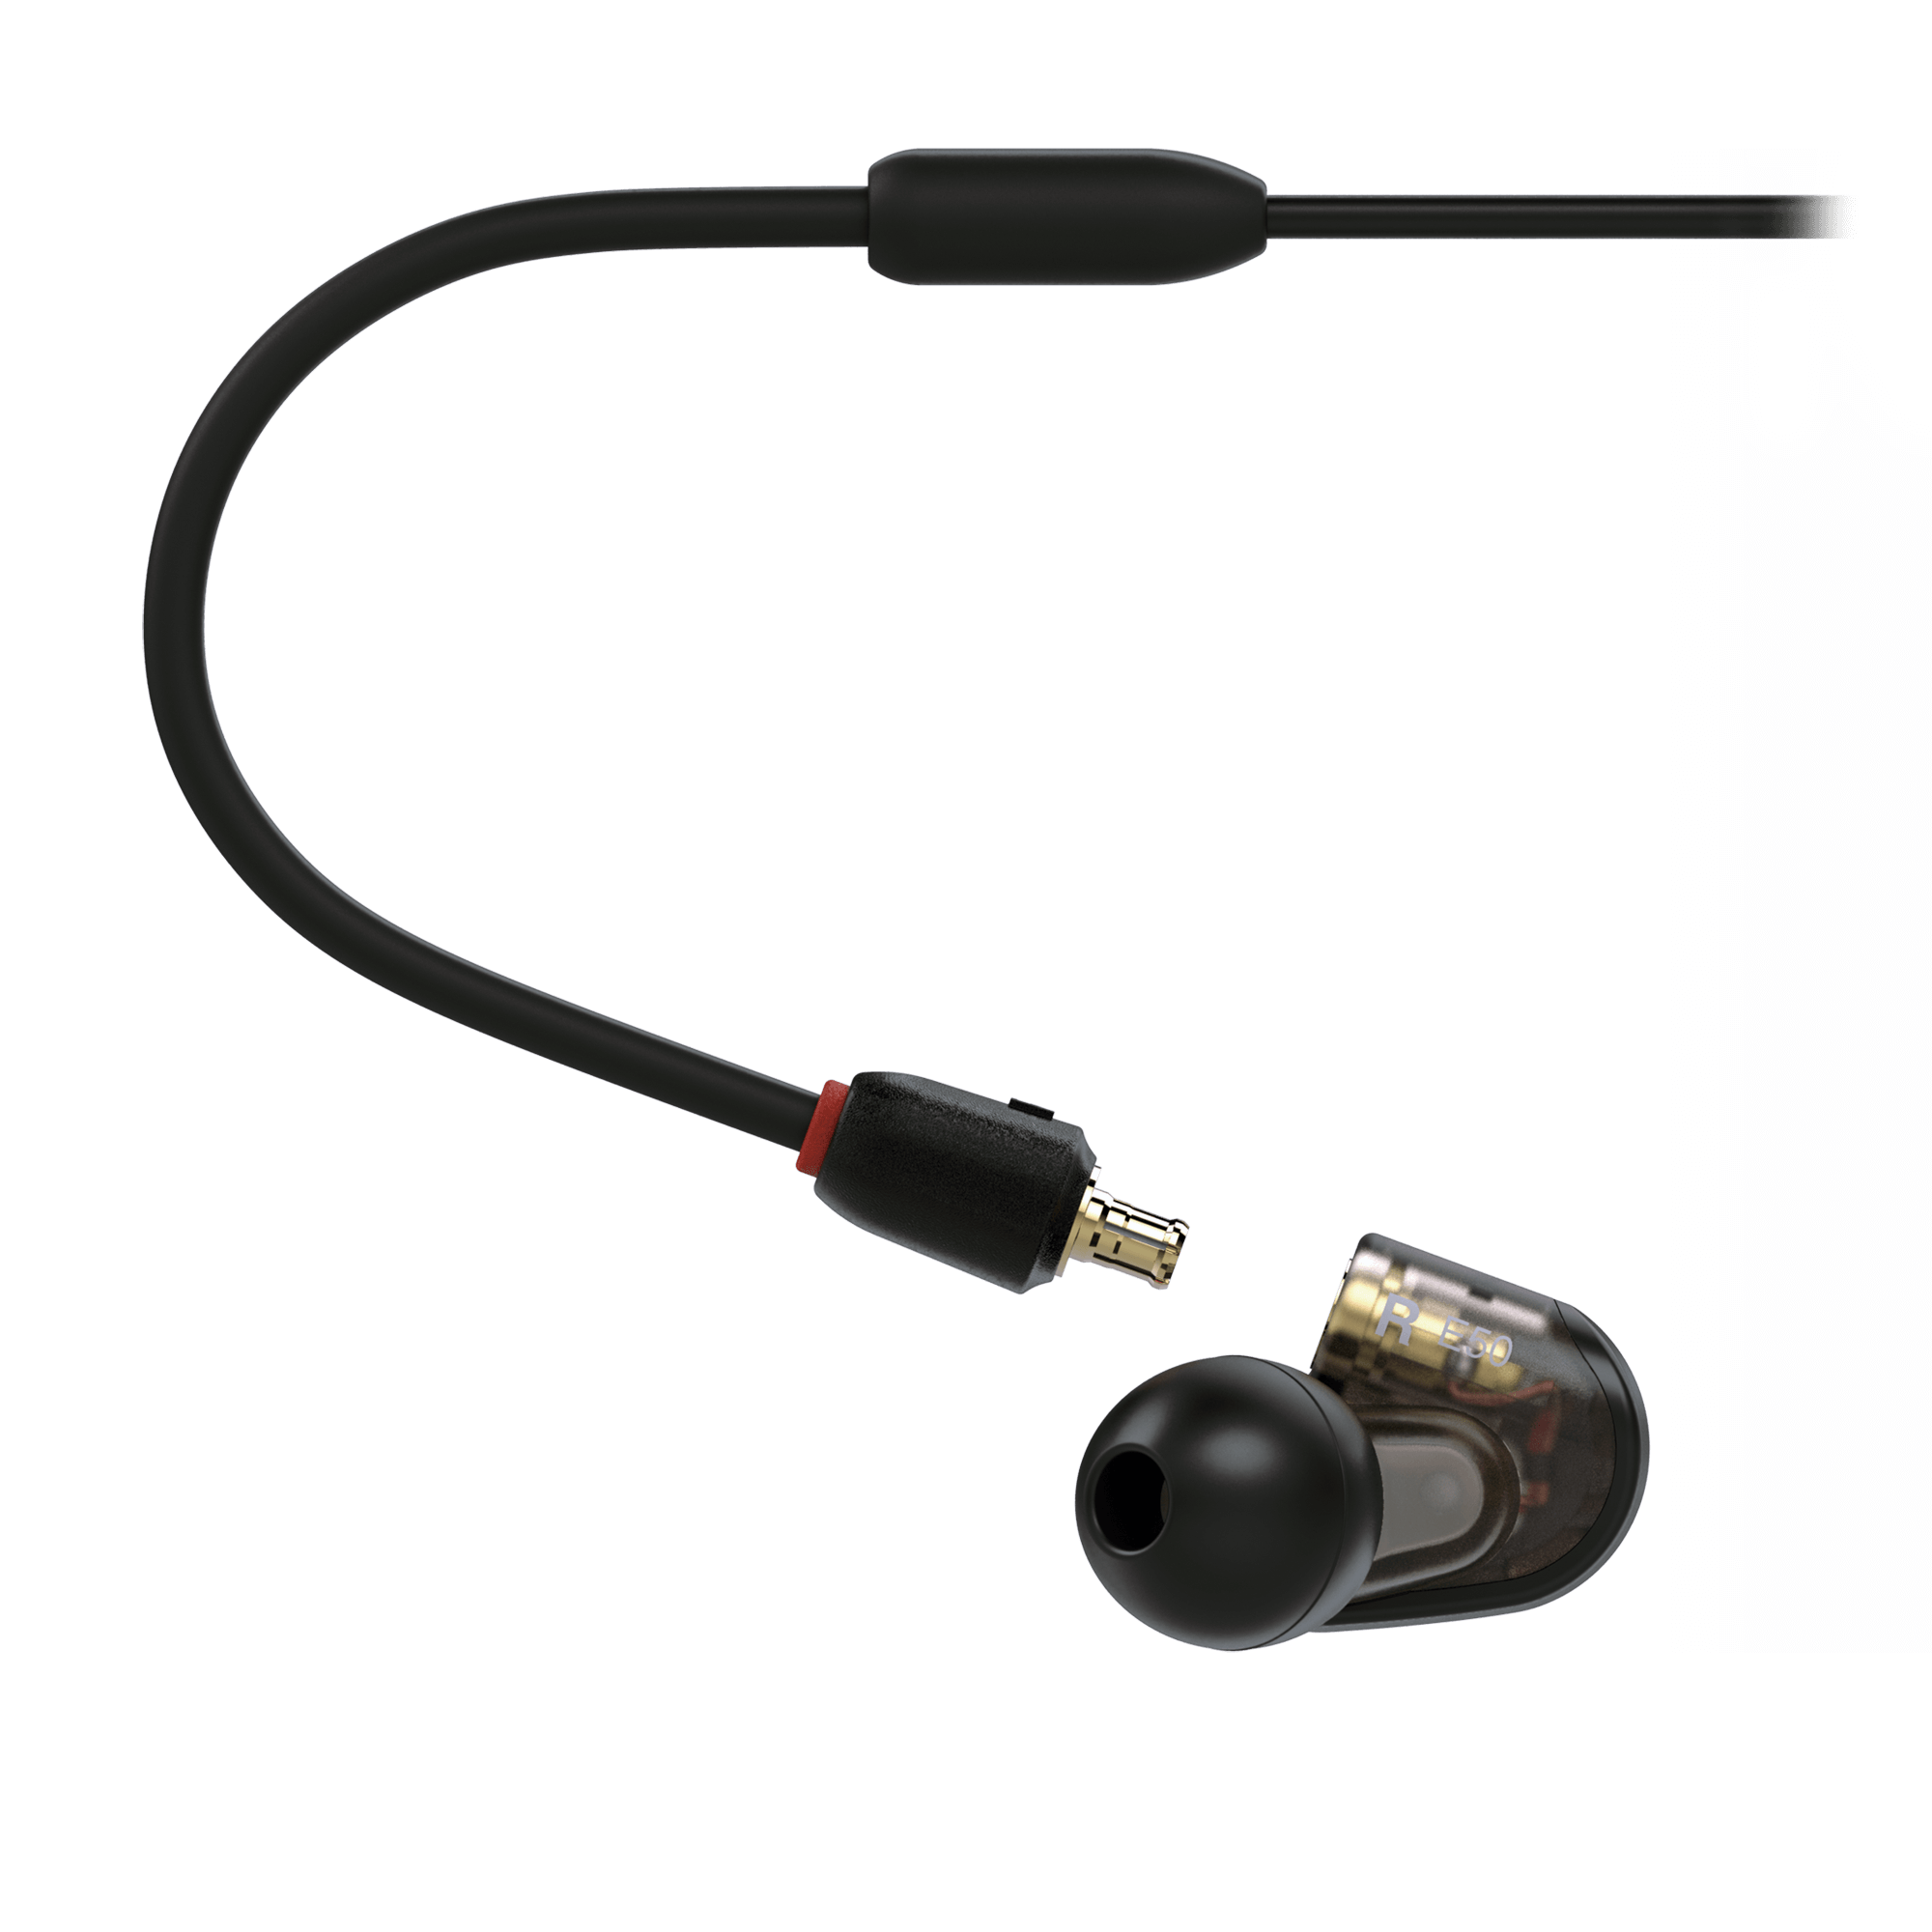 Audio Technica ATH-E50 - In-ear Monitor Headphones